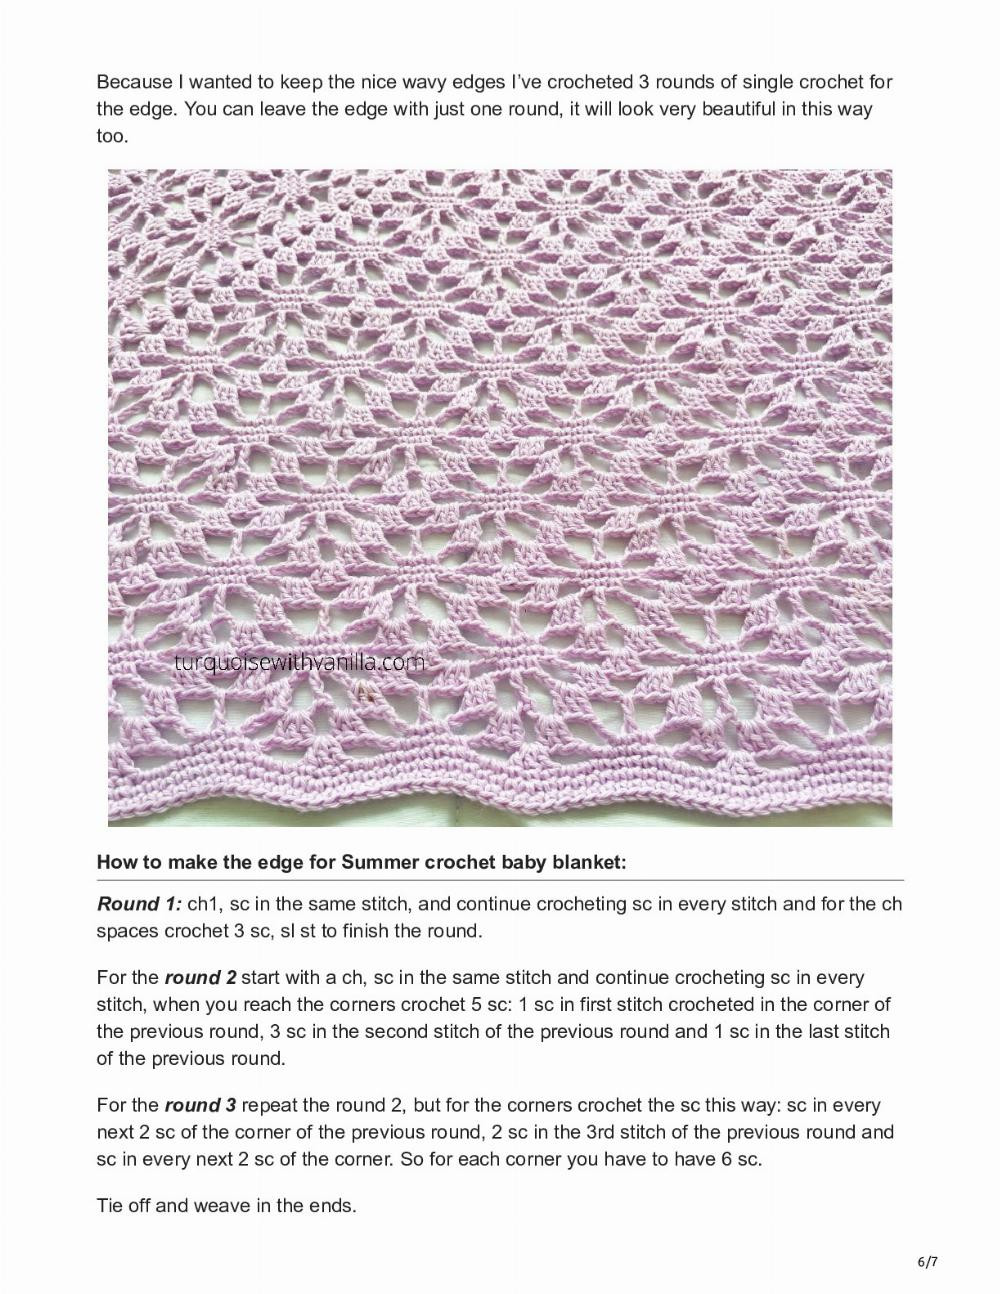 Summer crochet baby blanket